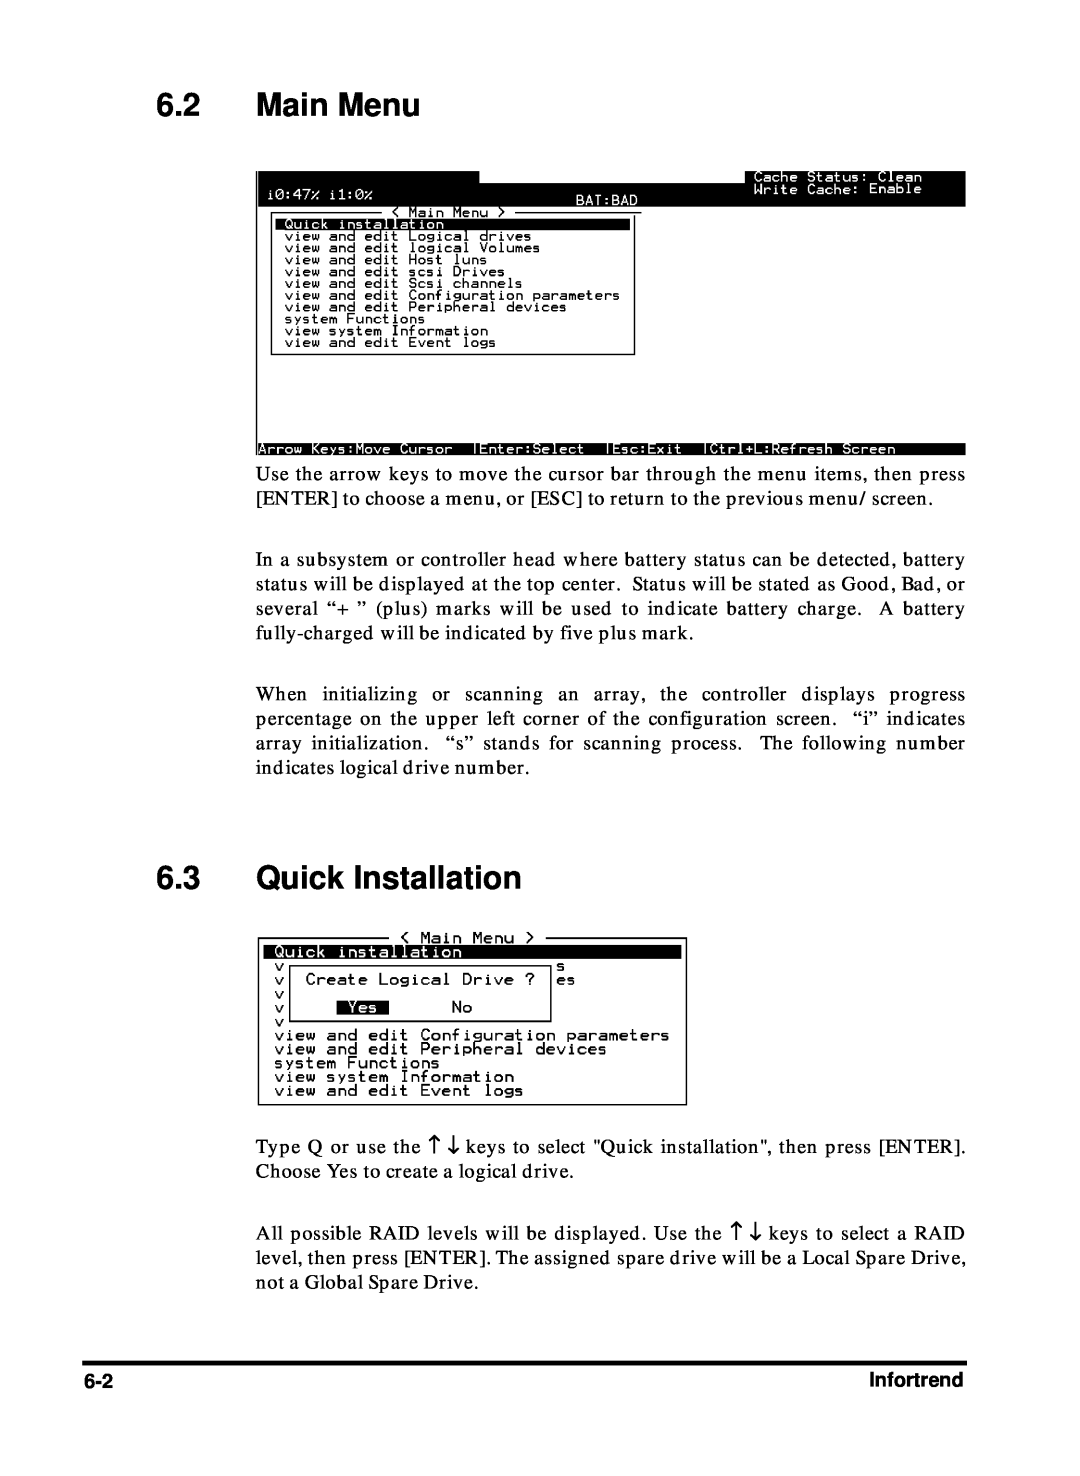 Compaq Infortrend manual Main Menu, Quick Installation 